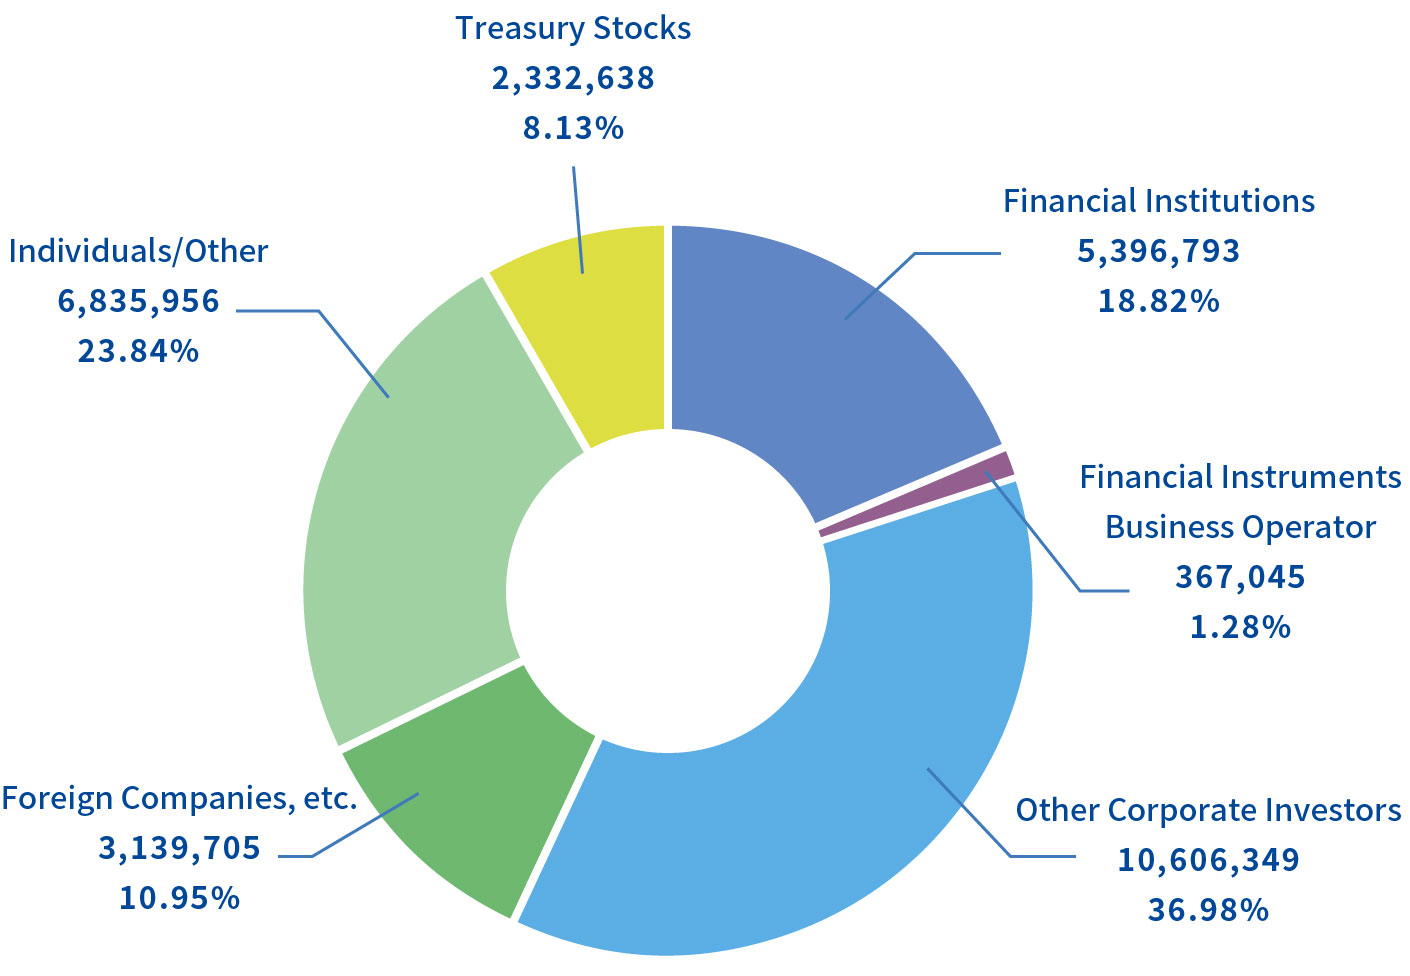 Distribution of Shareholders